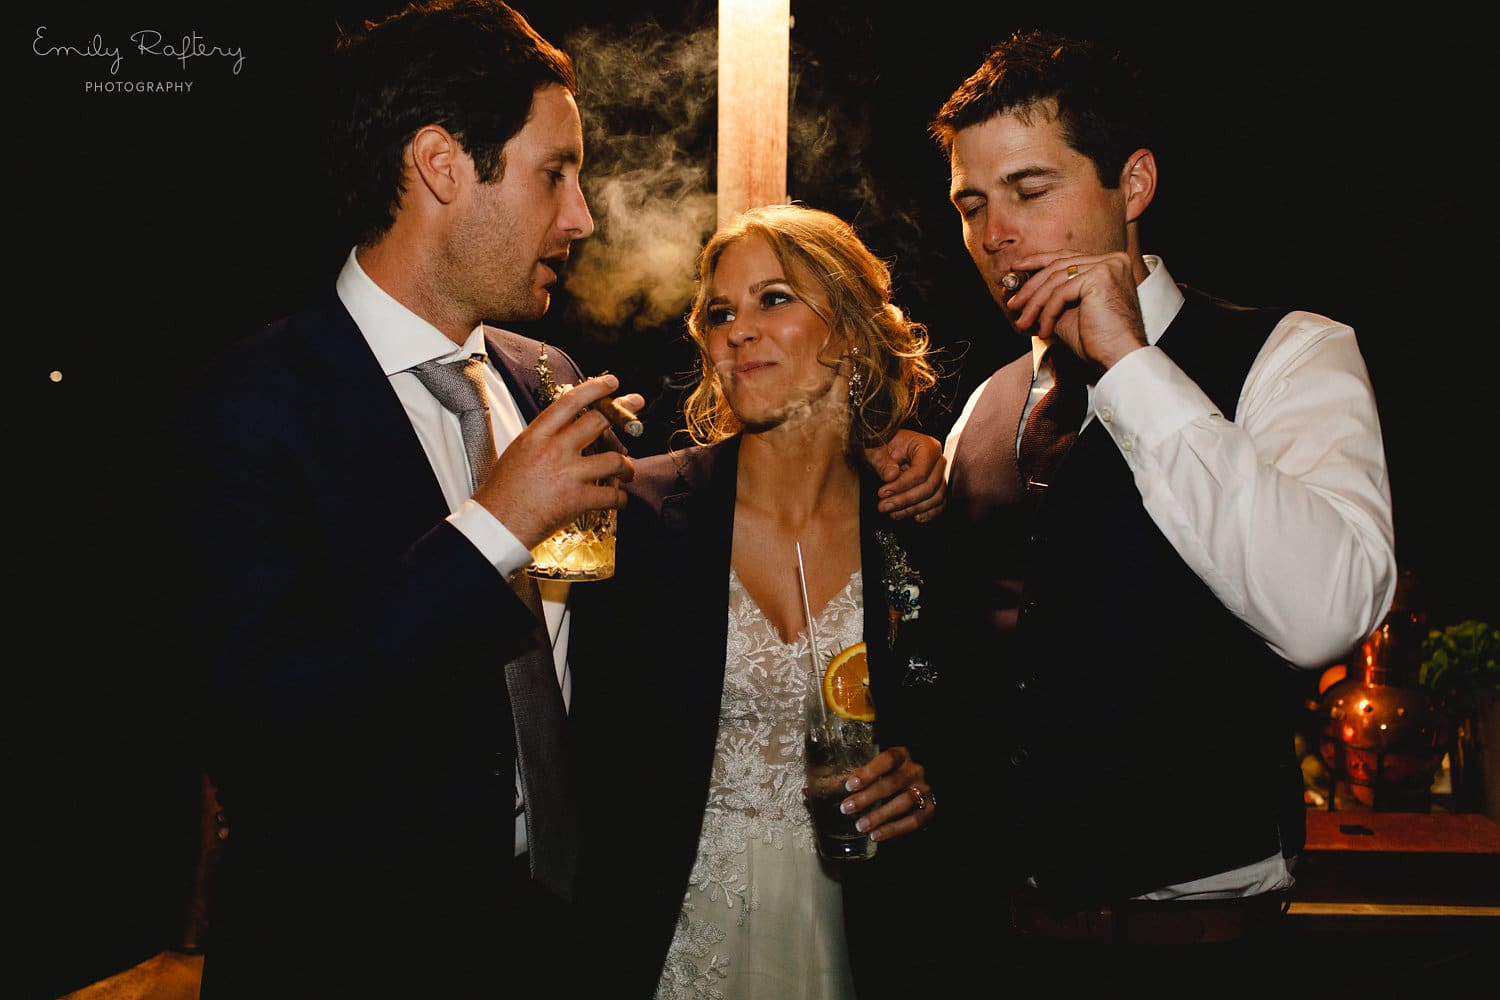 Real Weddings | Vinka Design | Real Brides Wearing Vinka Gowns | Helena and Tim at reception smoking cigars